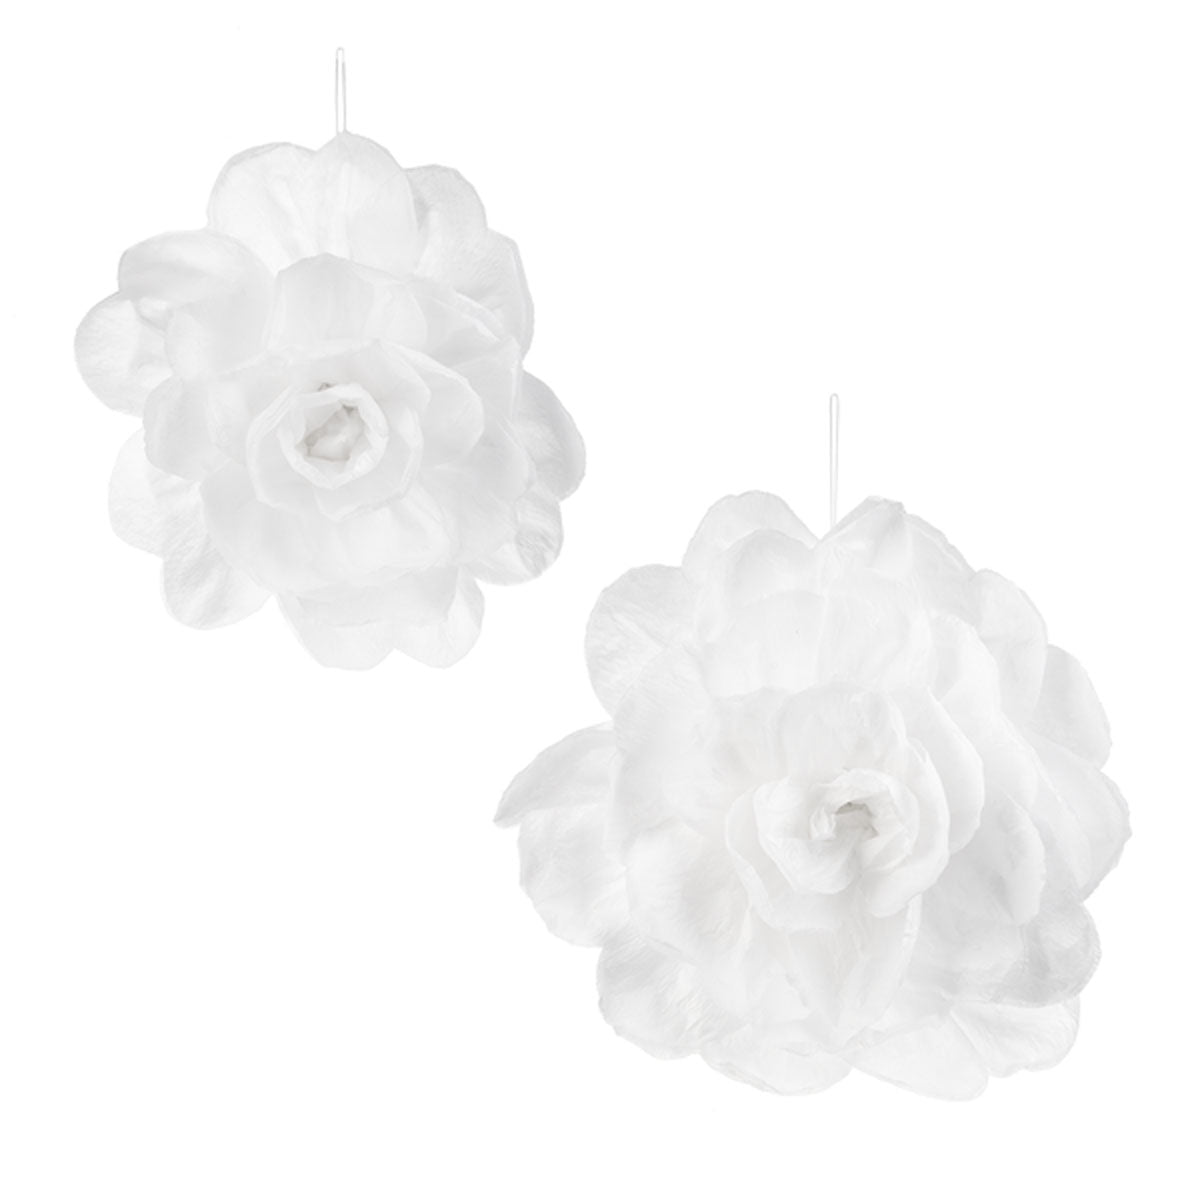 Textured White Flower Ornaments